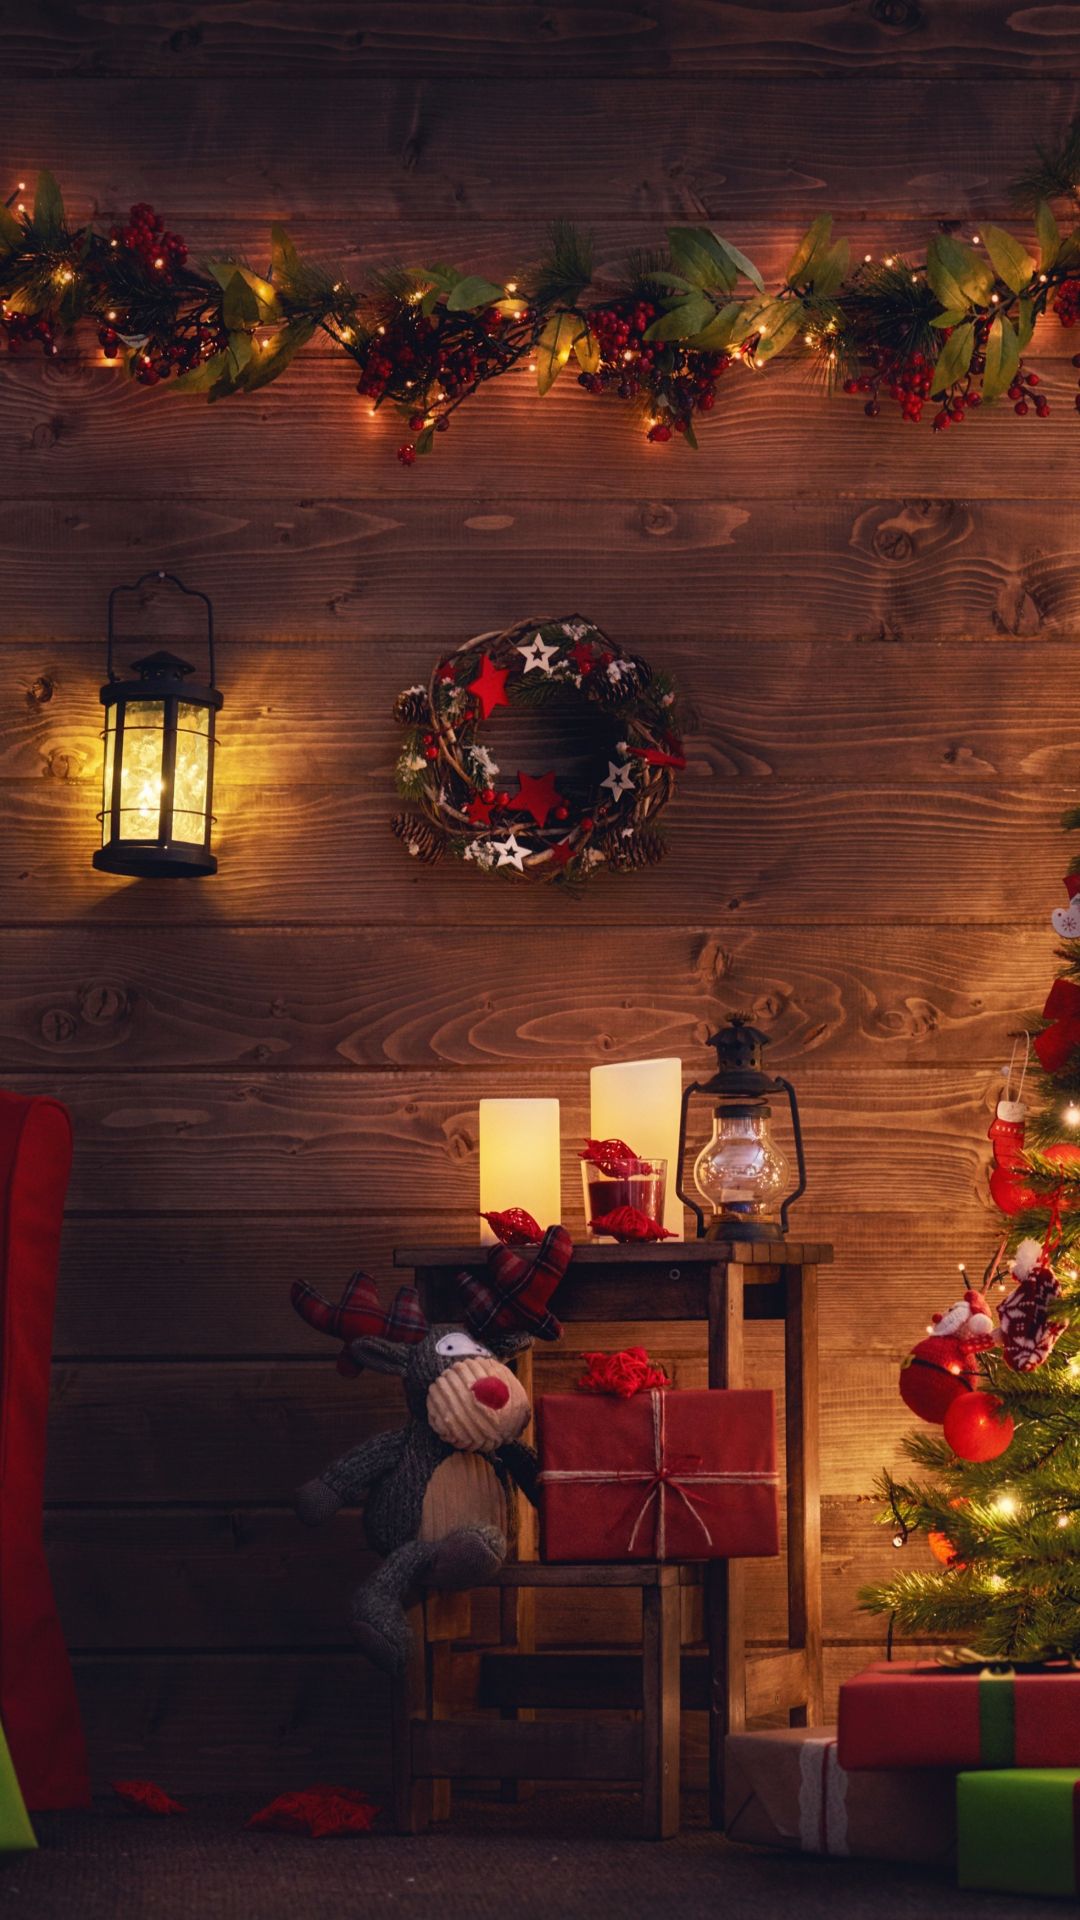 Download 1080x1920 wallpaper christmas tree, holiday, decorations, gifts, samsung galaxy s s note, sony xperia z, z z z htc one, lenovo vibe, google pixel oneplus honor xiaomi redmi